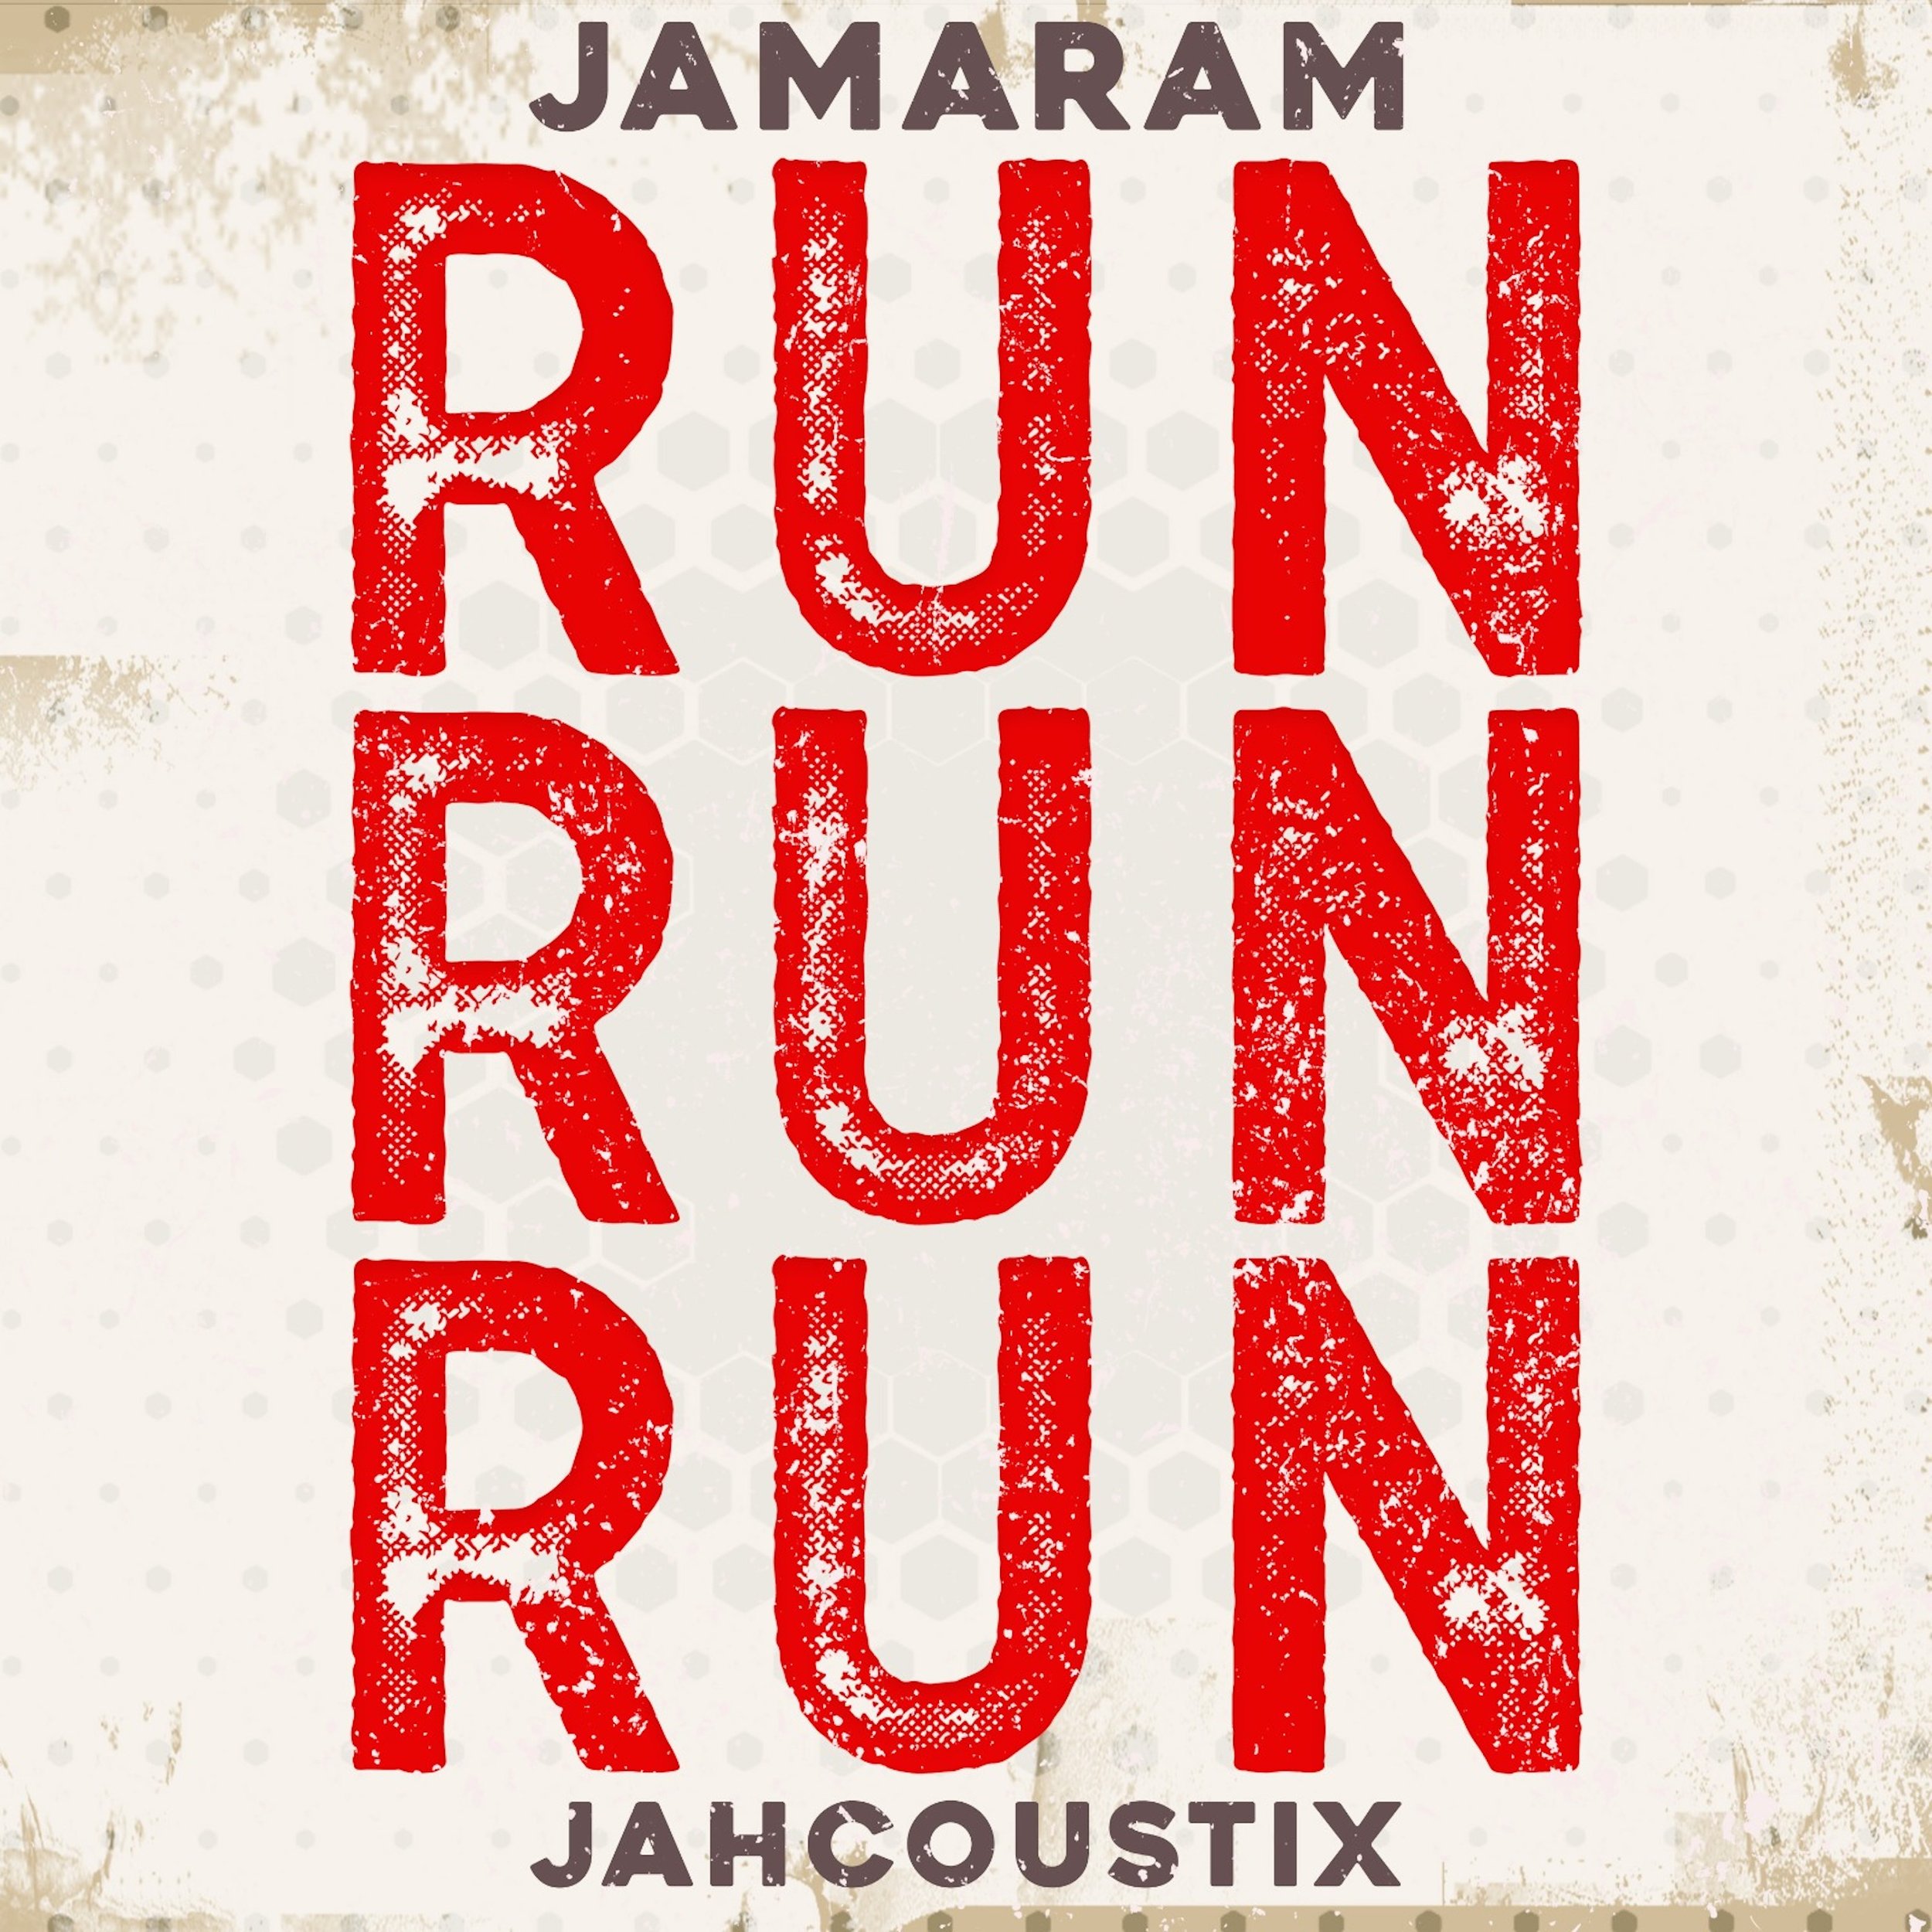 2022 - JAMARAM meets JAHCOUSTIX - Run Run Run (single)